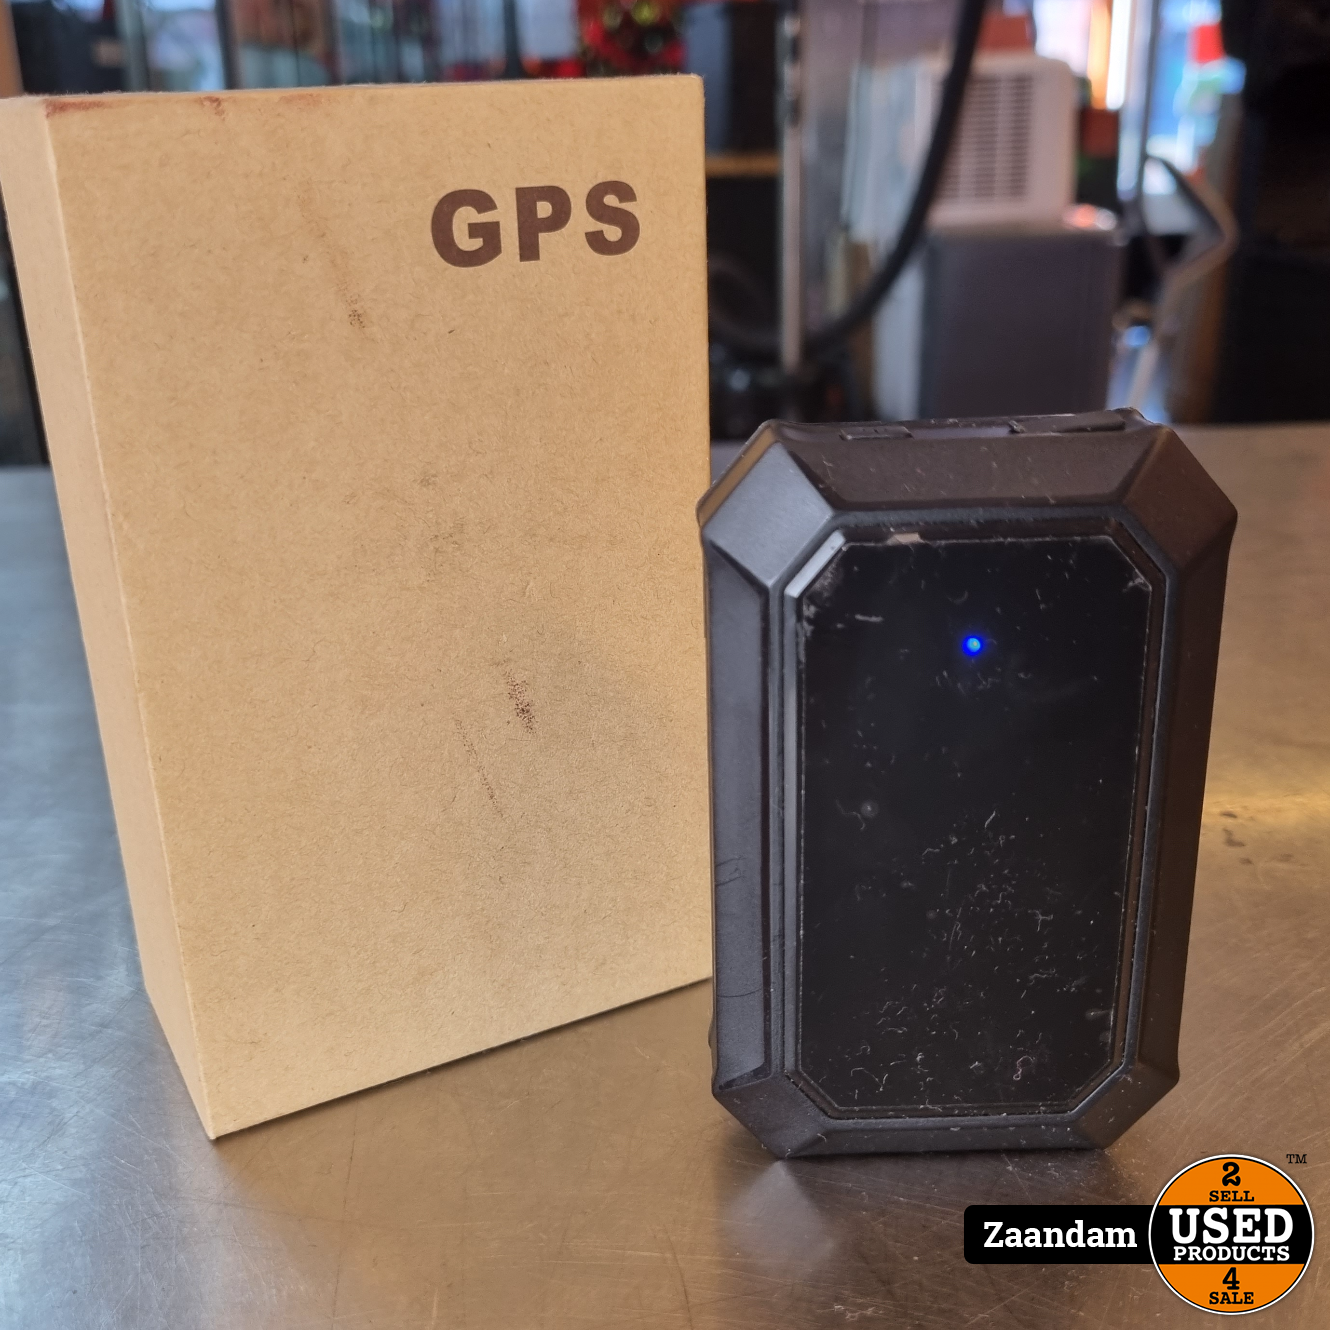 GPS Tracker Incl. - Used Products Zaandam